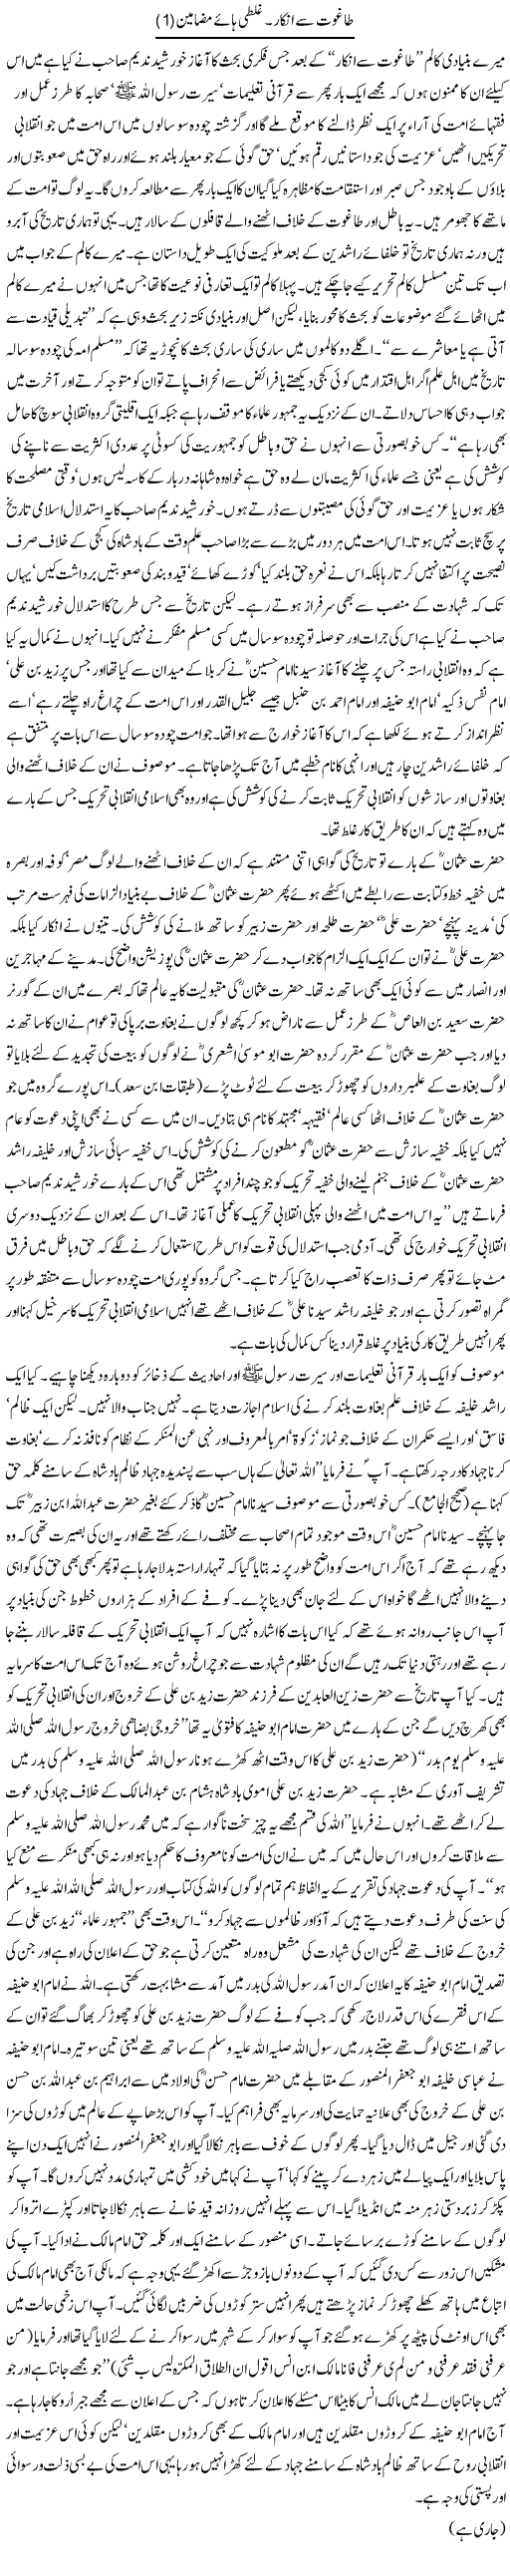 Taghoot se inkar. ghalti haae mazameen | Orya Maqbool Jan | Daily Urdu Columns